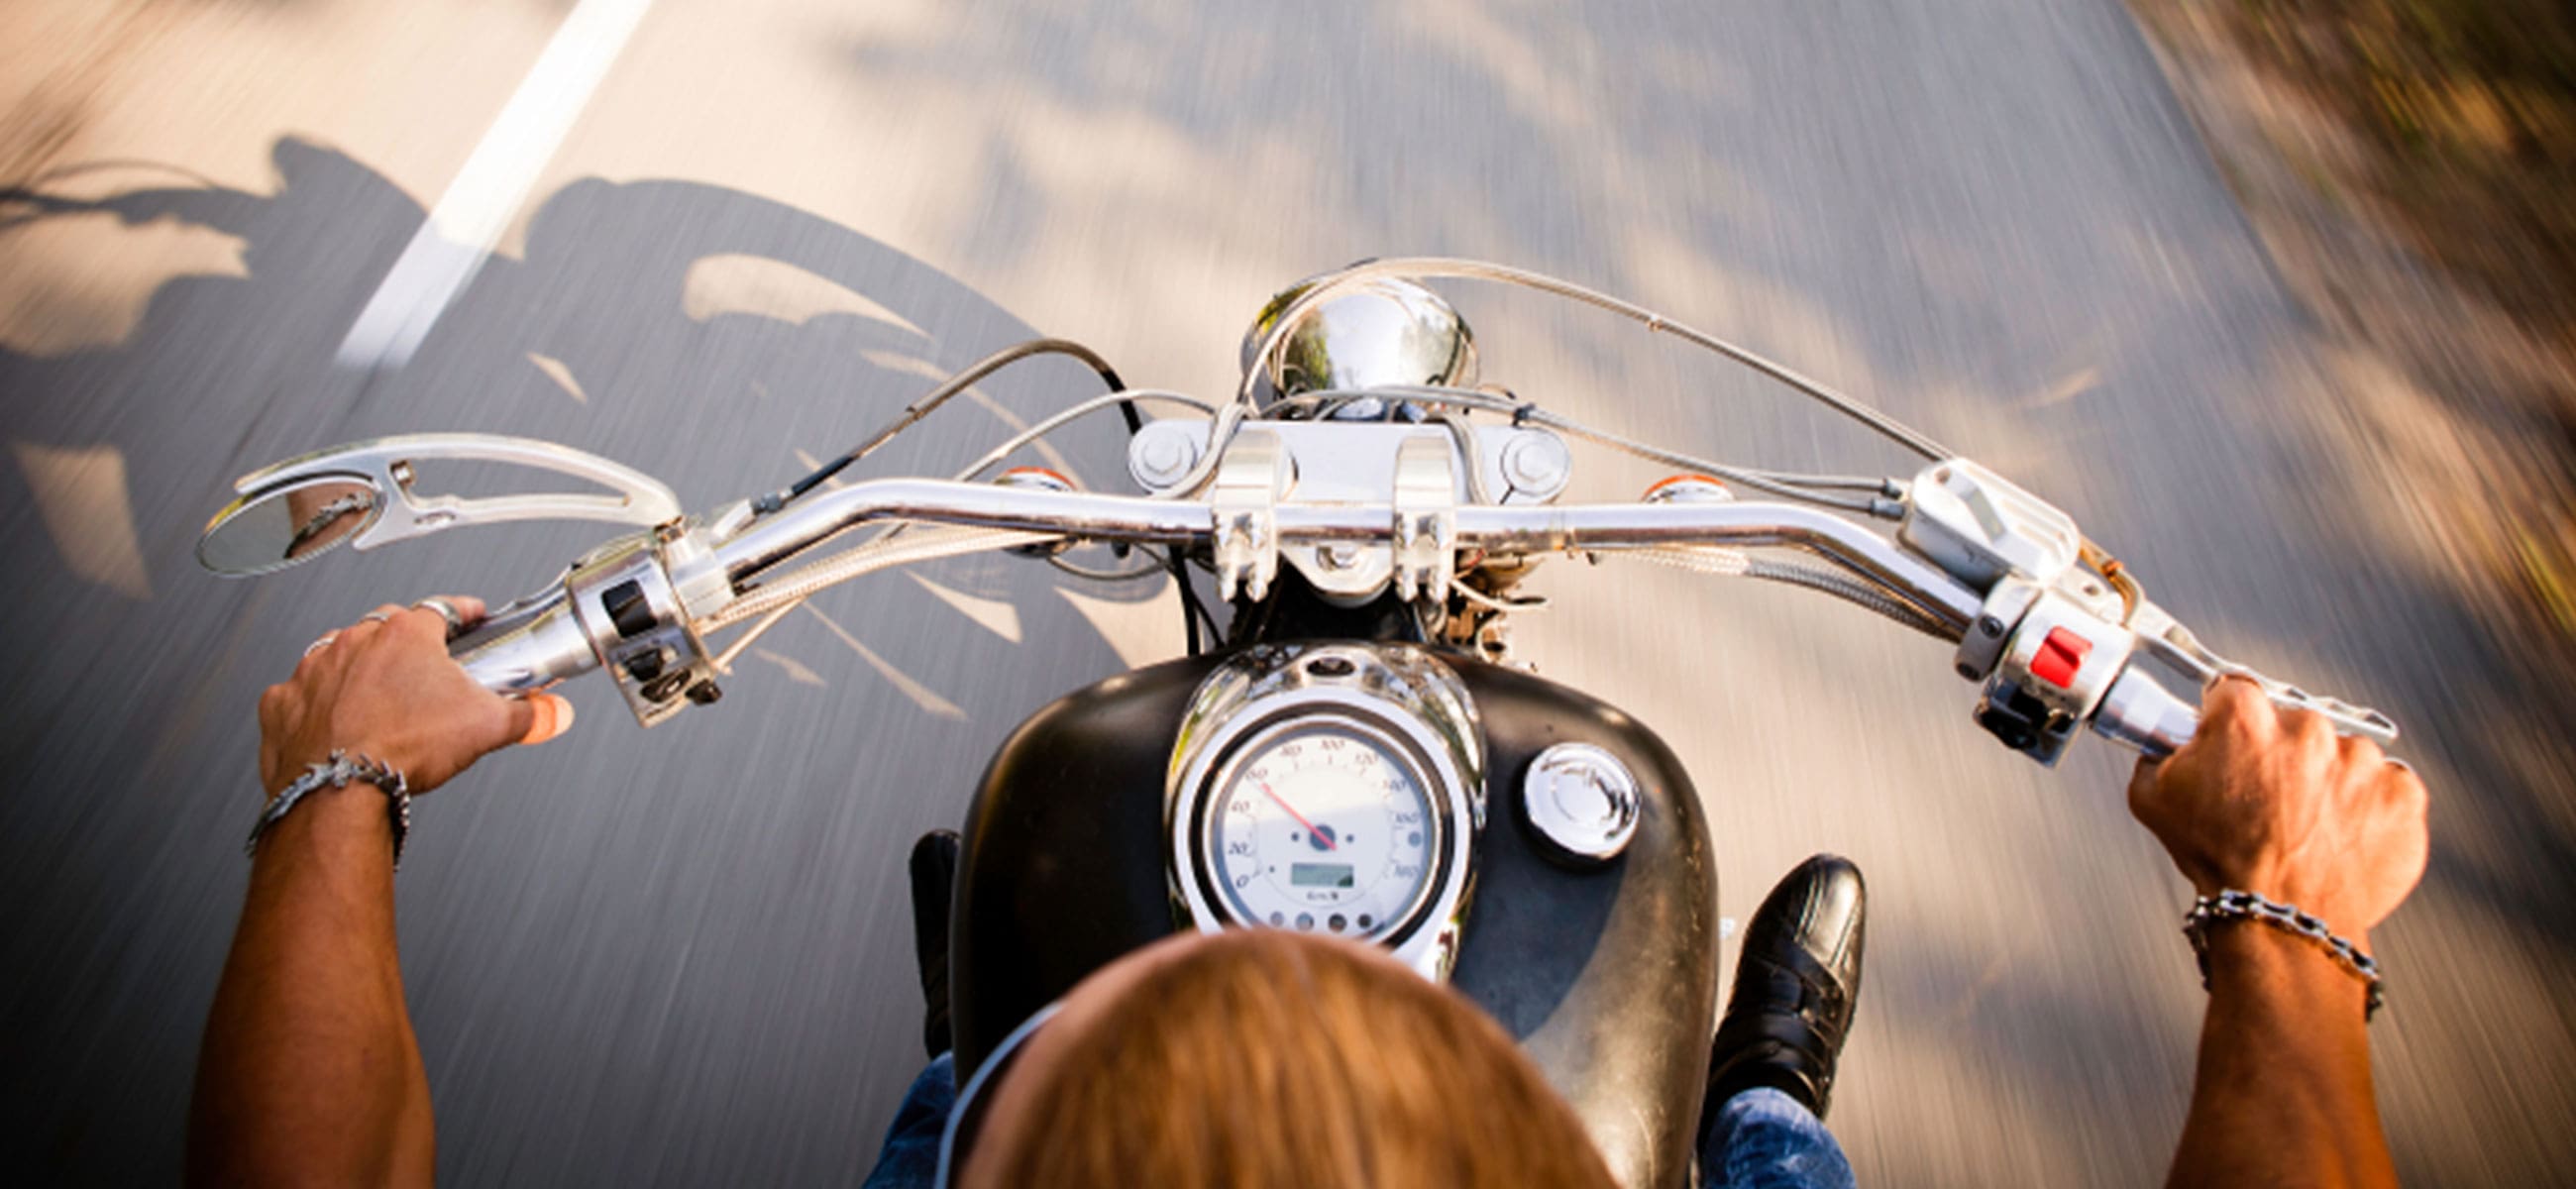 South Carolina Motorcycle Insurance Coverage